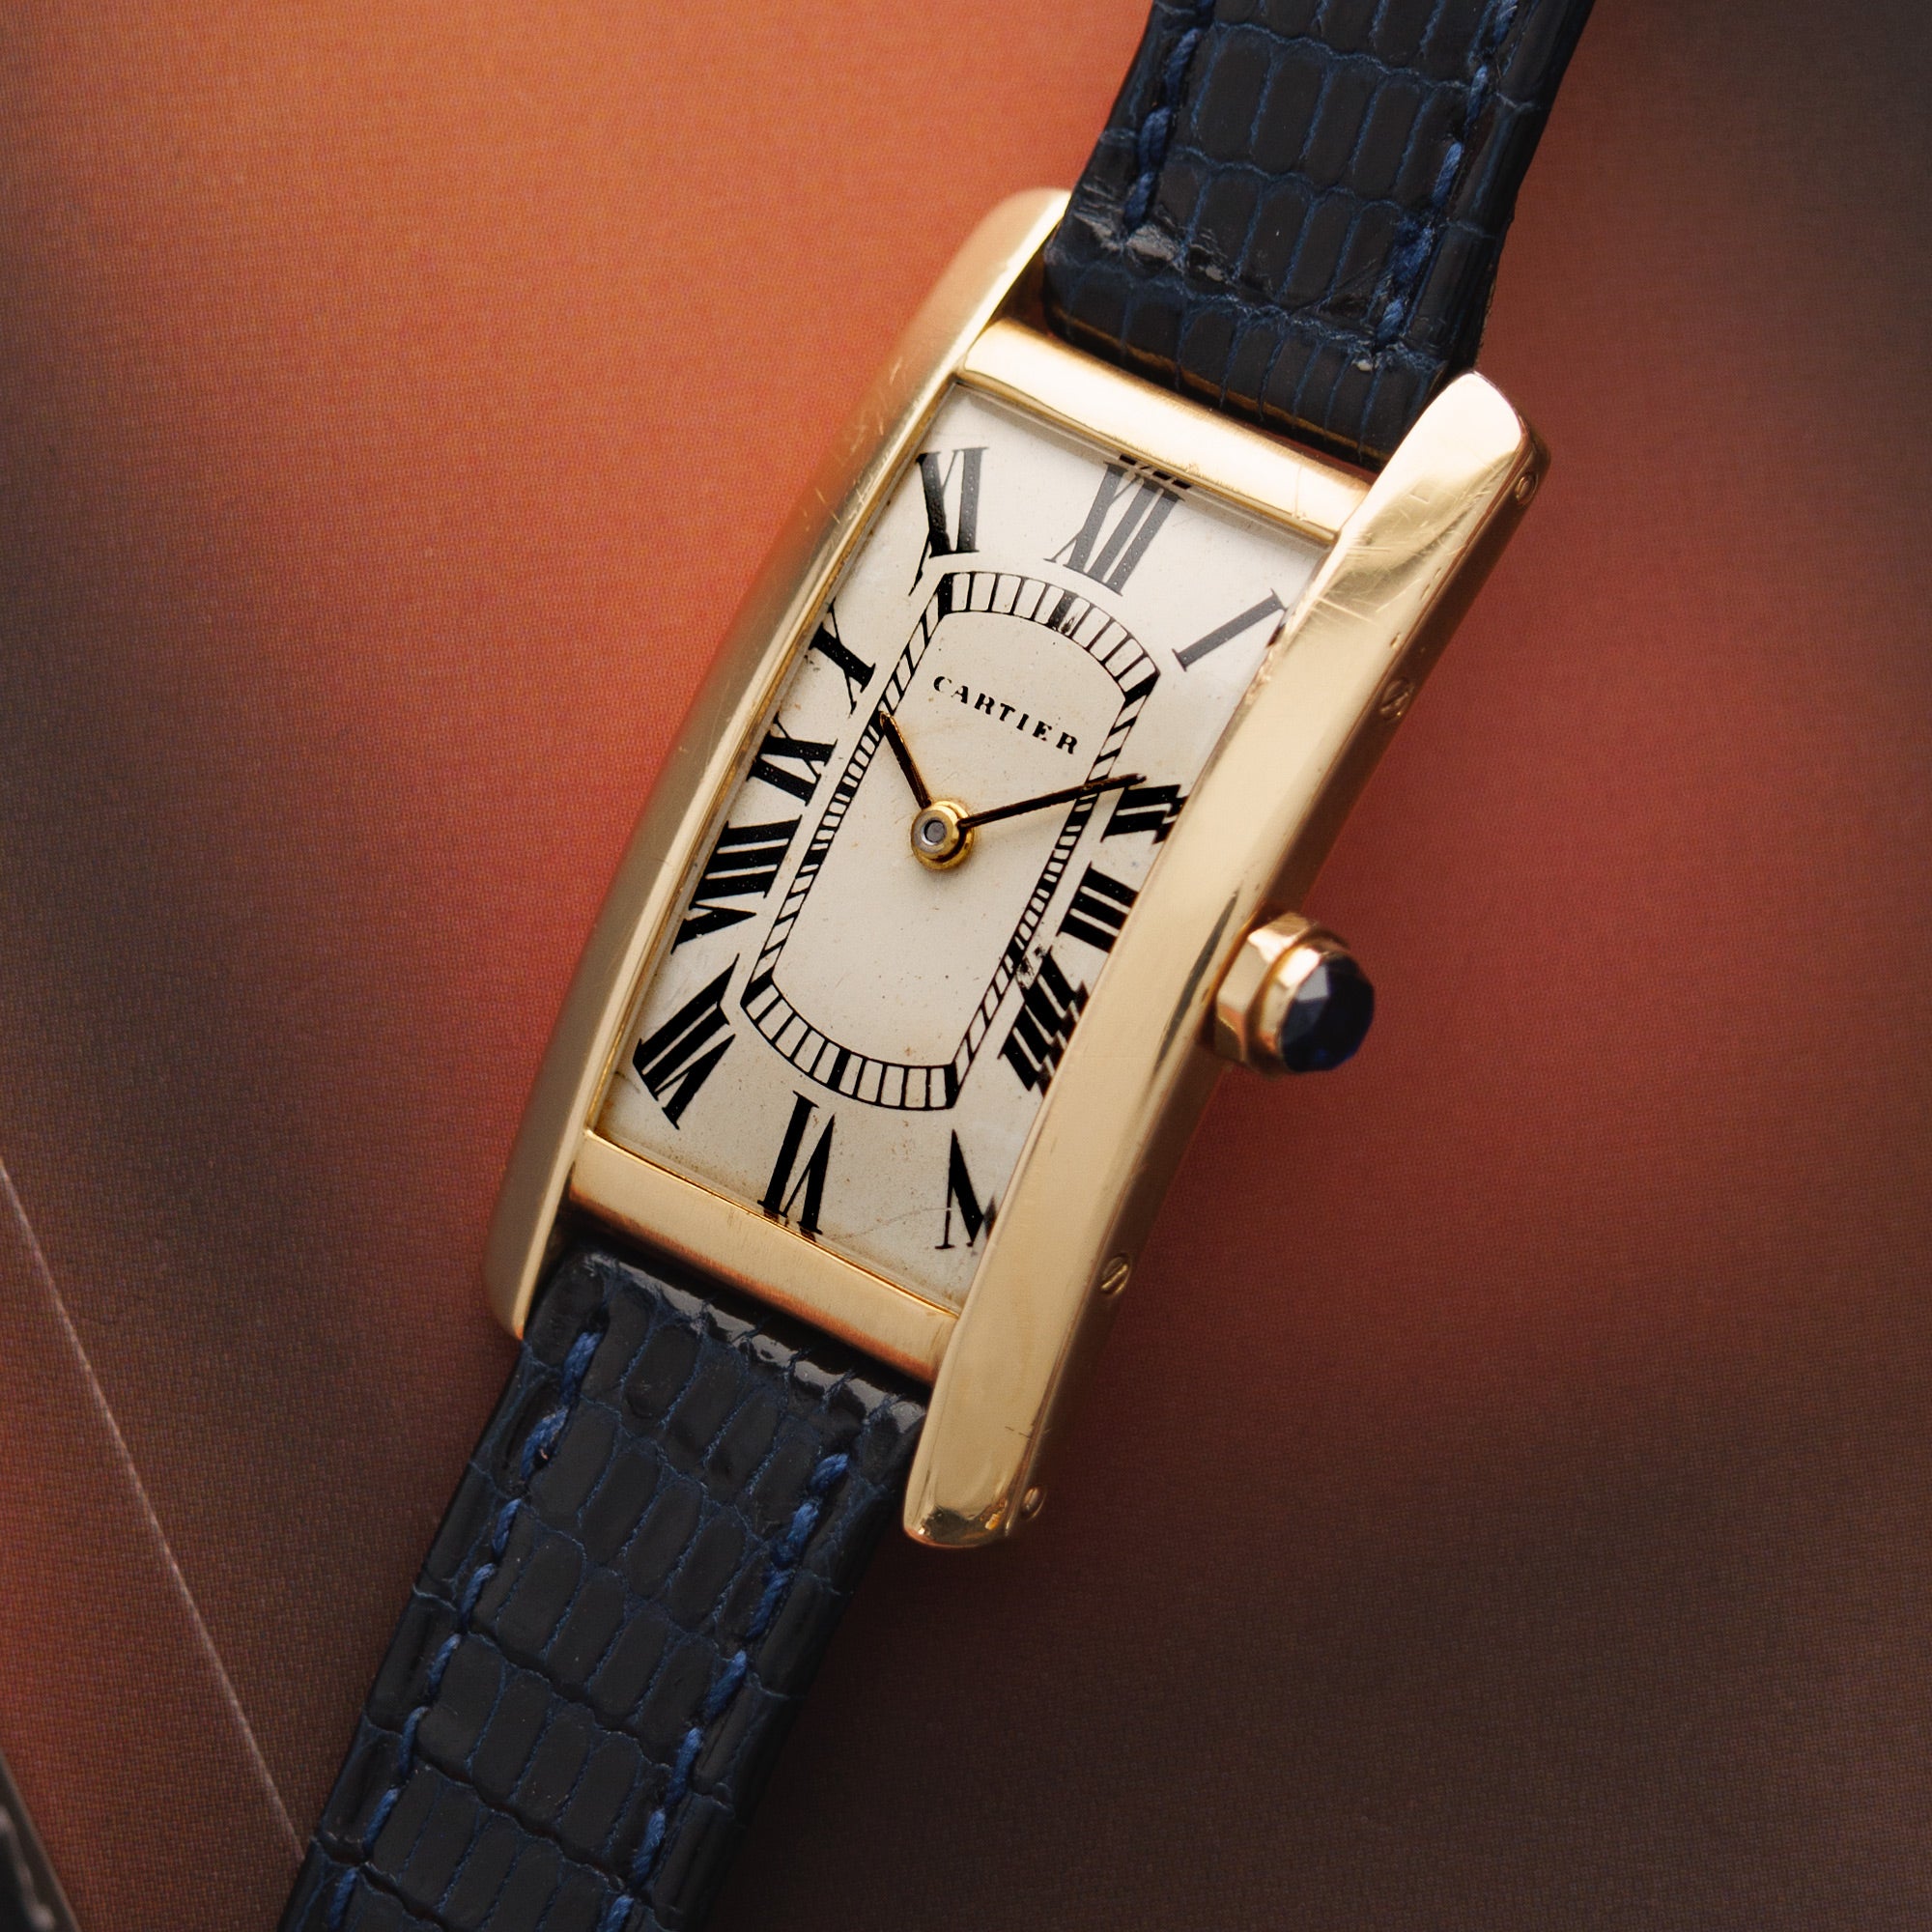 Cartier - Cartier Yellow Gold Tank Cintree Watch - The Keystone Watches